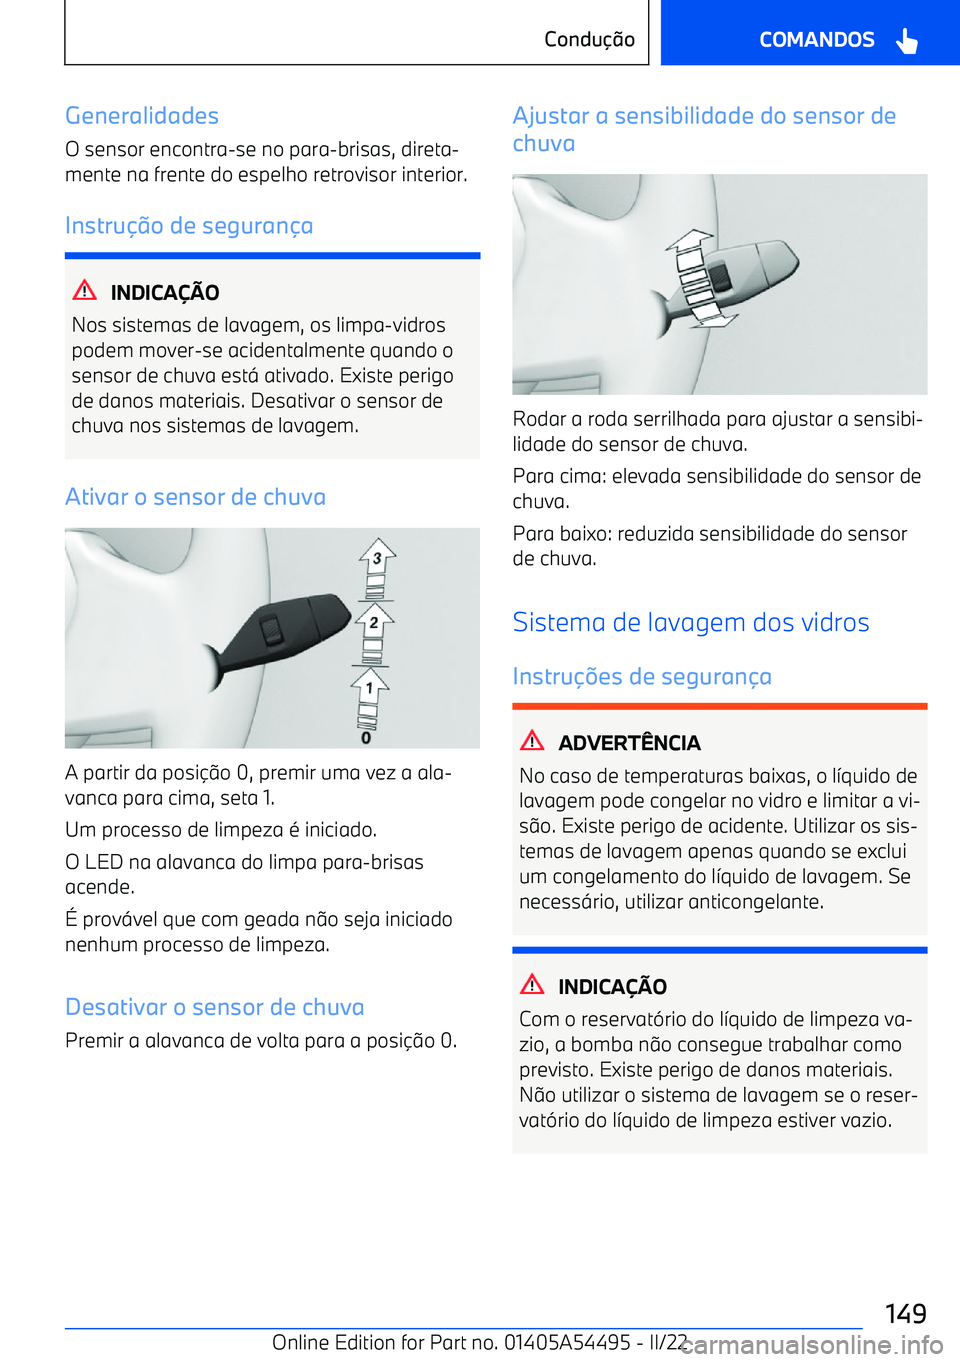 BMW IX 2022  Manual do condutor (in Portuguese) Generalidades
O sensor encontra